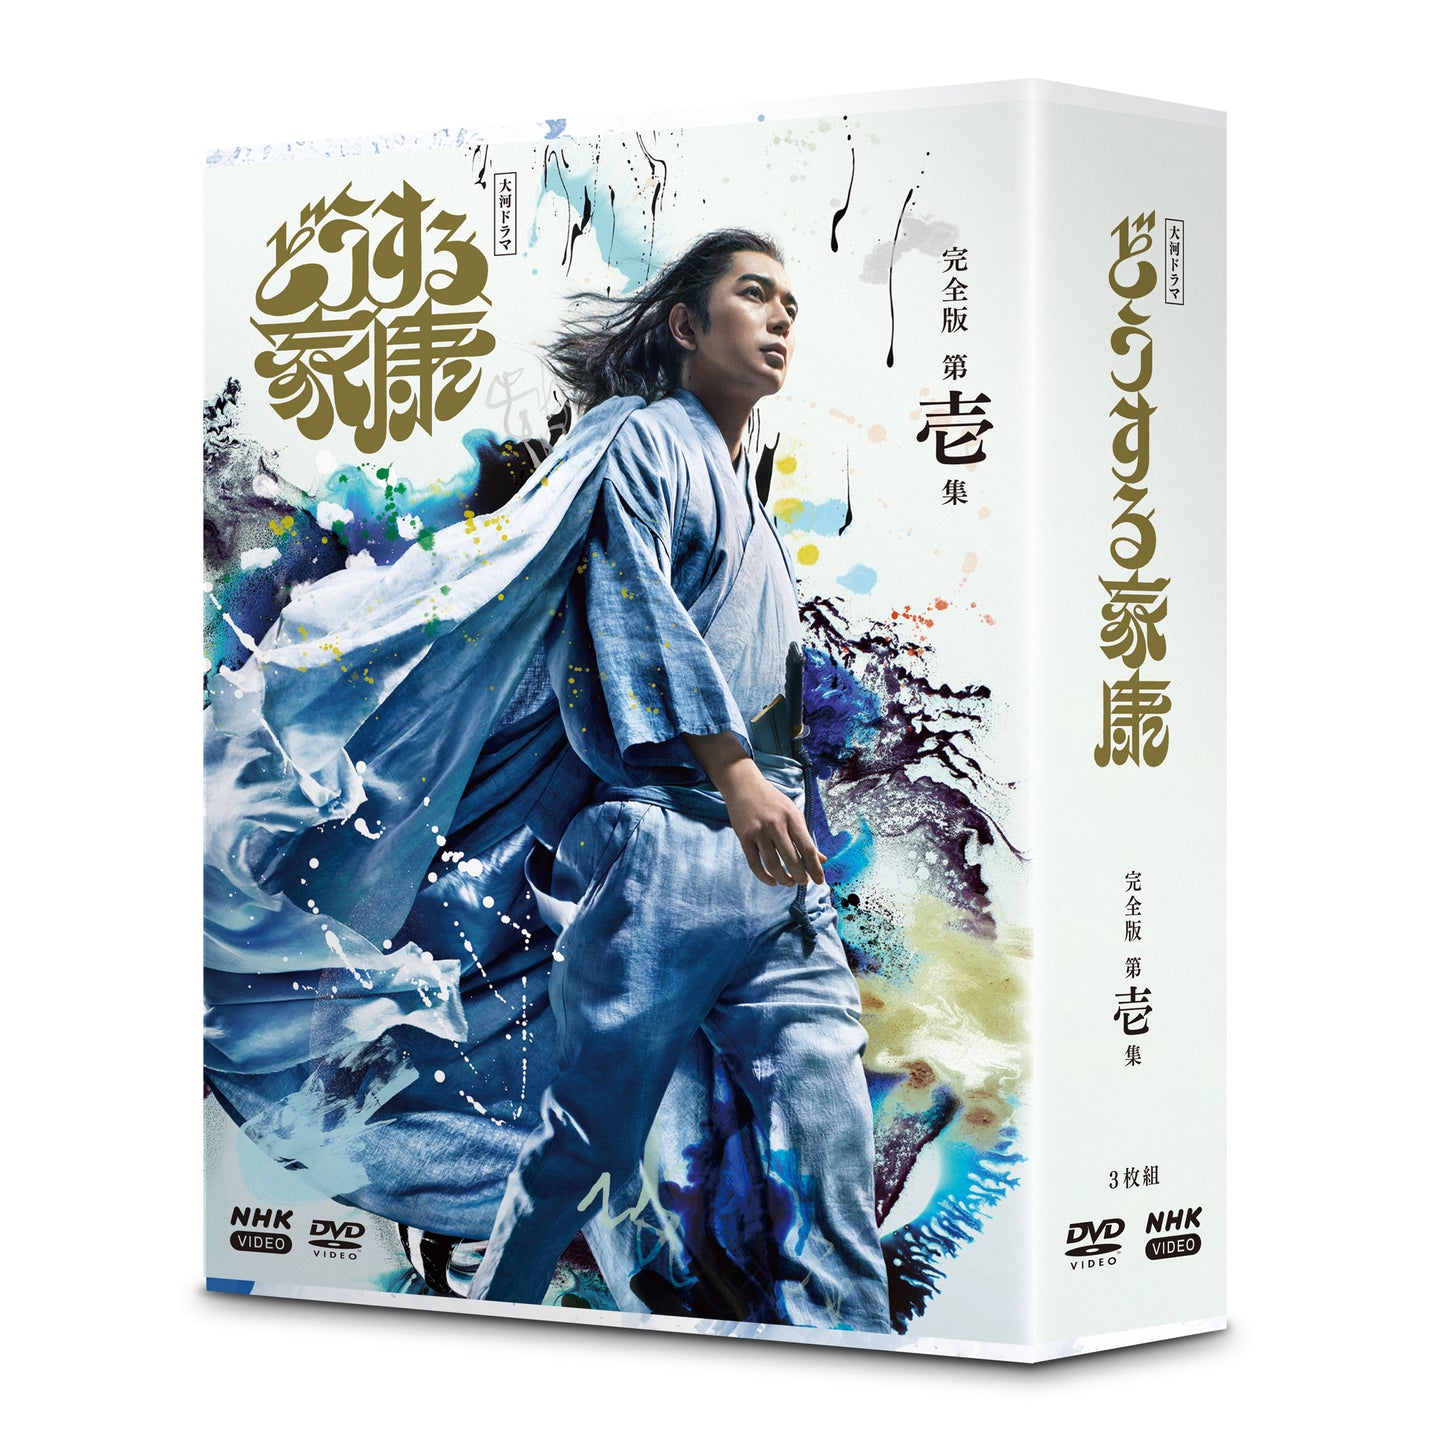 DVD NHK大河ドラマ 毛利元就 完全版 第1集+第2集 -